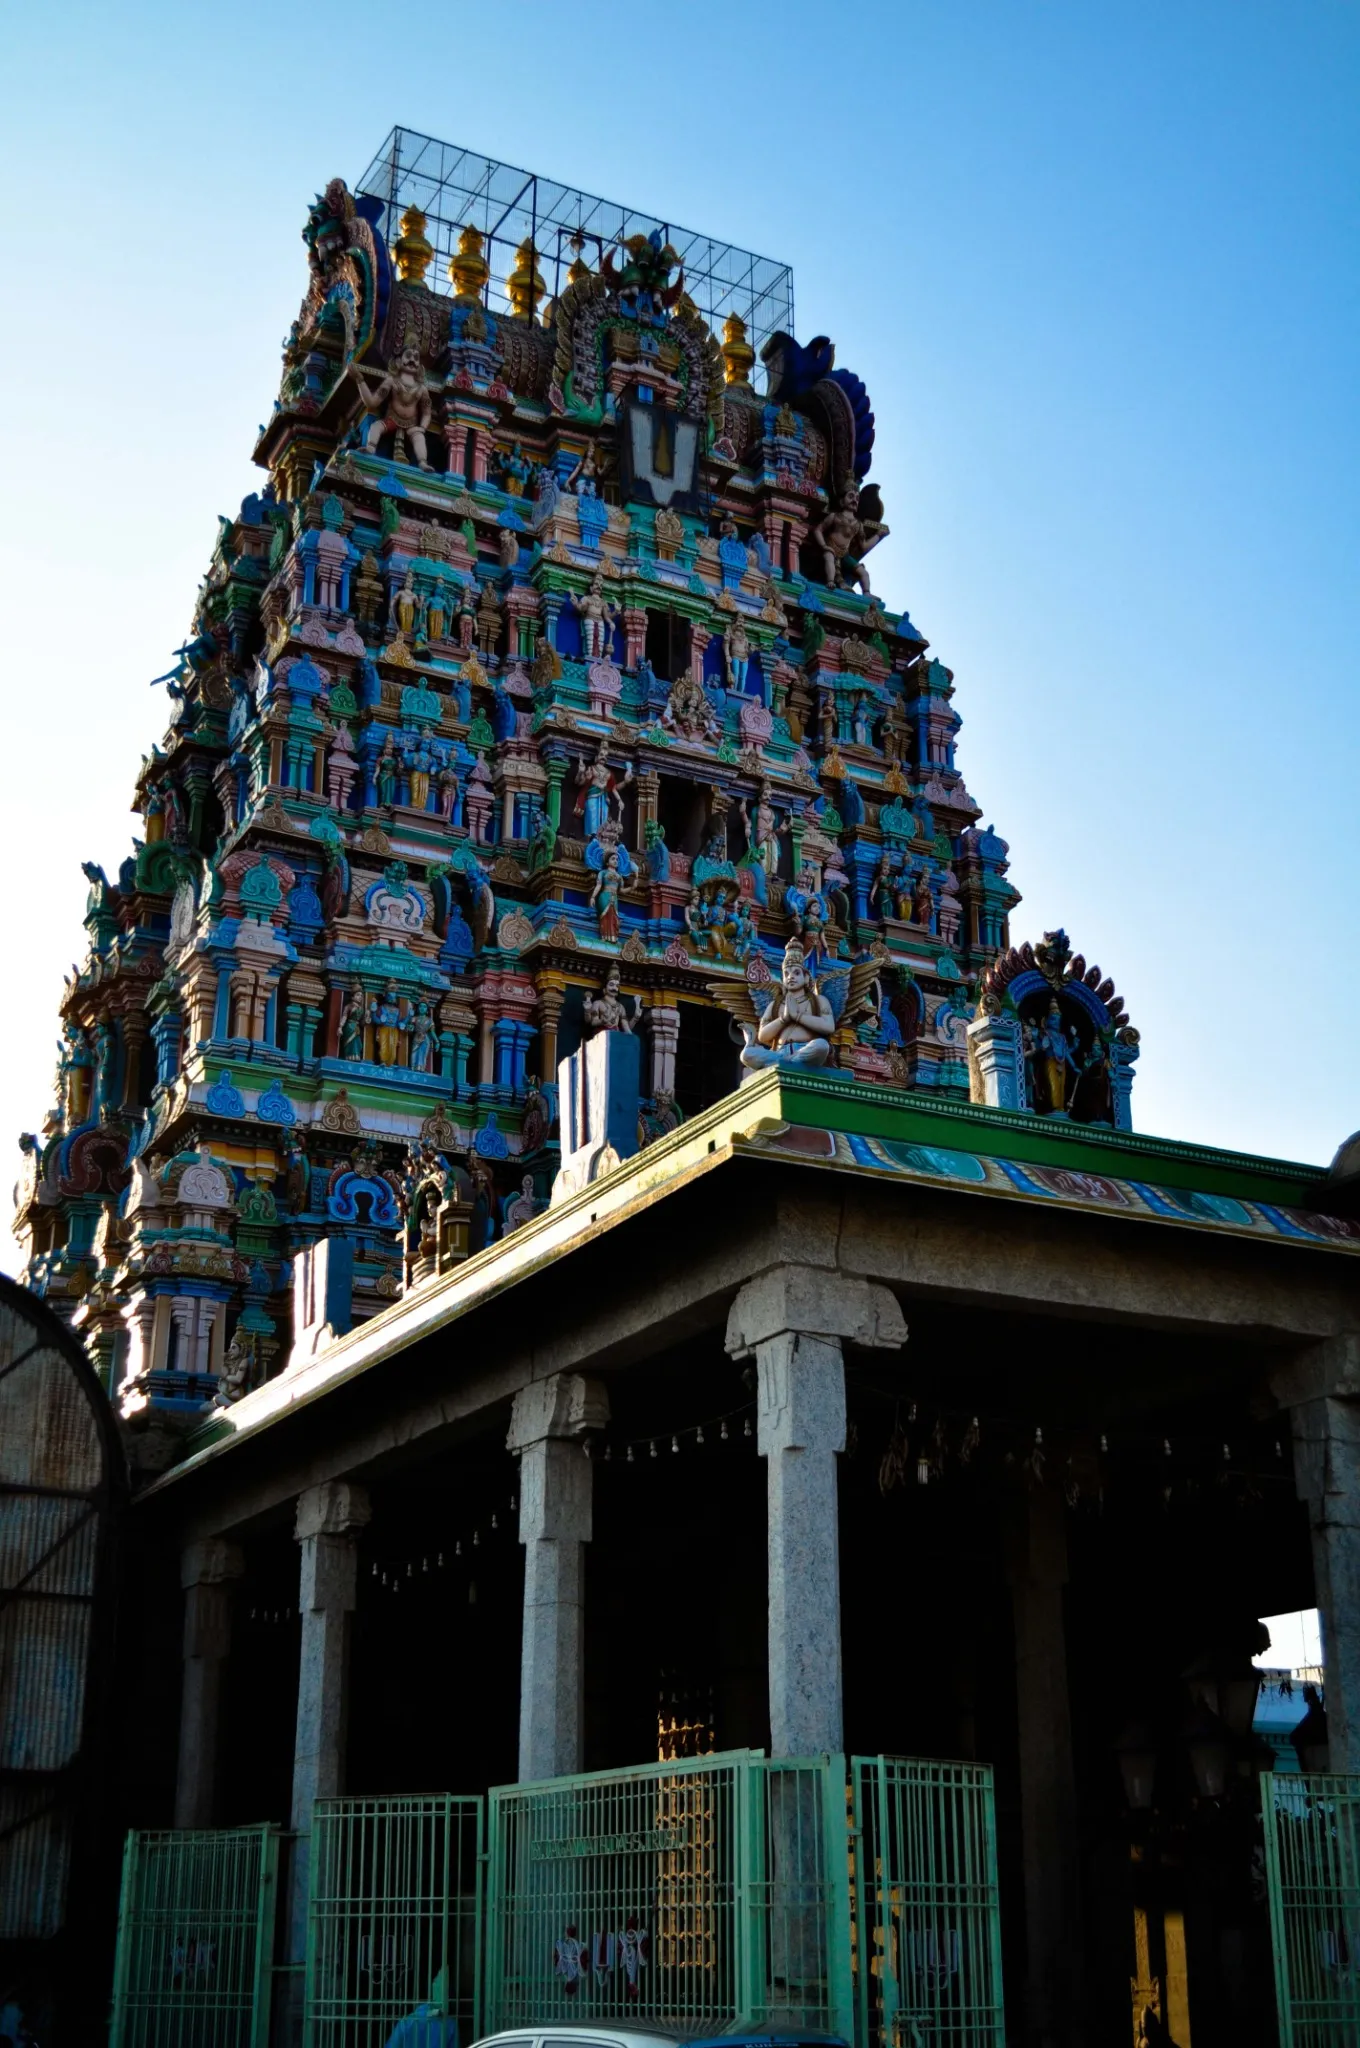 Sri Ramanujar Temple, gopuram, Hindu temple, colorful architecture, Dravidian style, South Indian temple, intricate carvings, temple entrance, sacred art, mythological figures, Sri Ramanuja, Vaishnavism, spiritual site, religious architecture